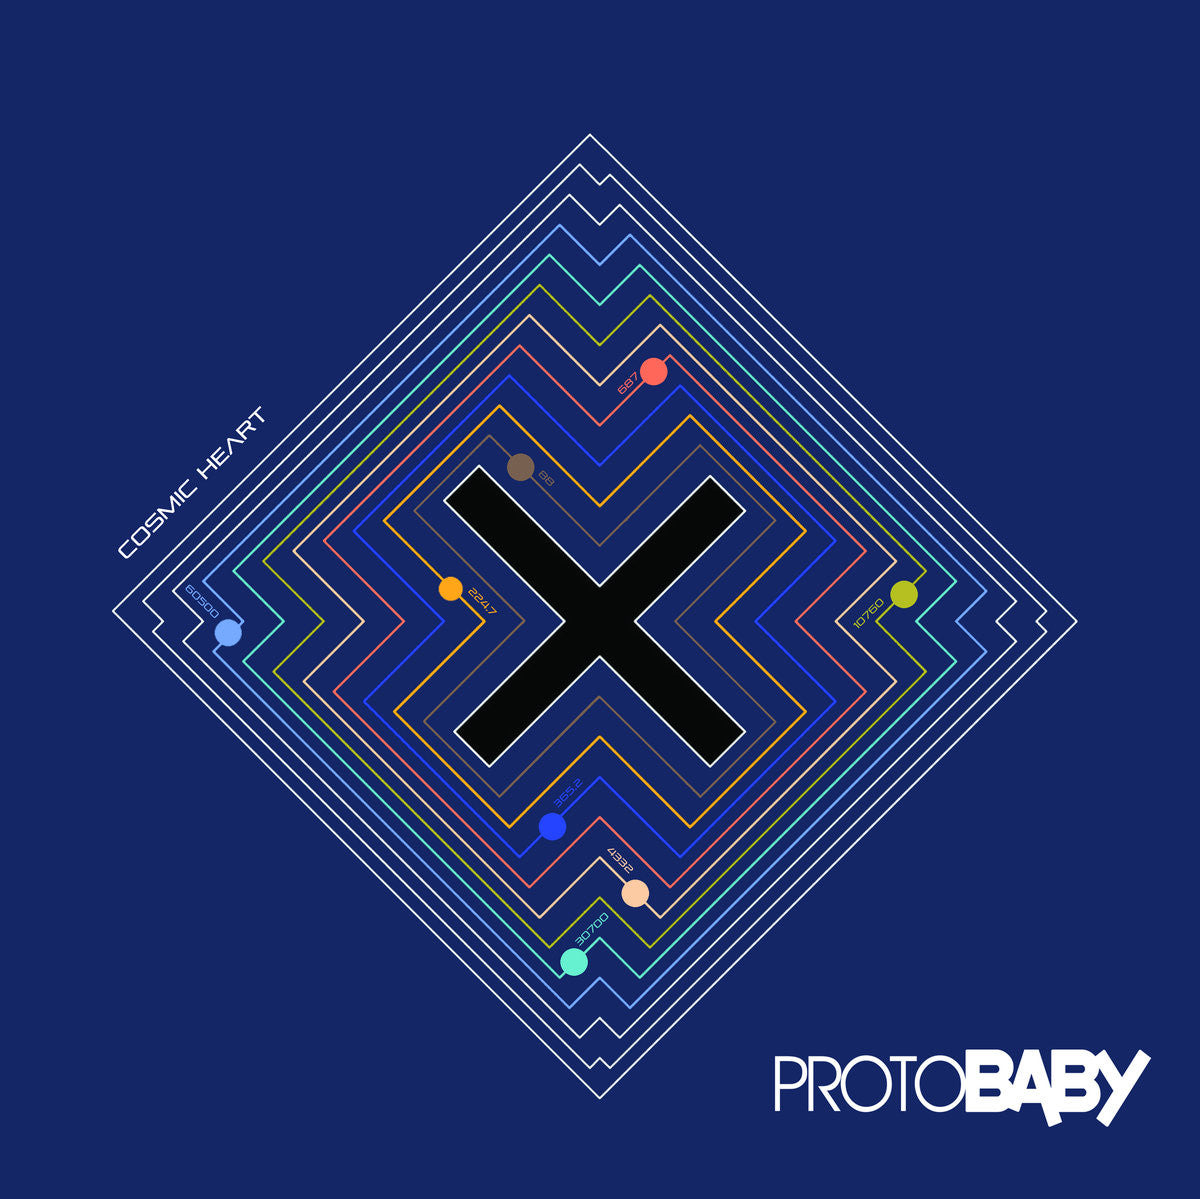 Protobaby - Cosmic Heart LP & CD  (Limited Edition Blue Vinyl)